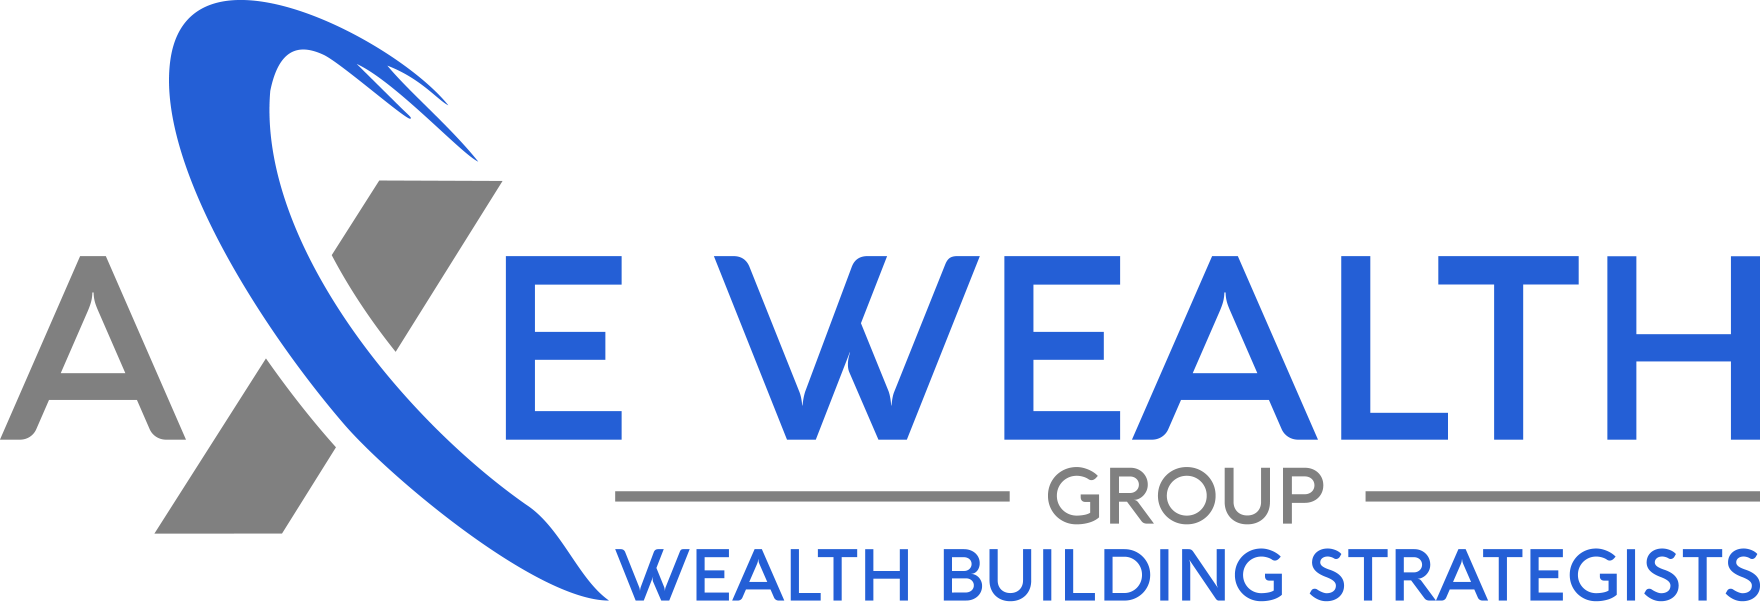 Axe Wealth Group